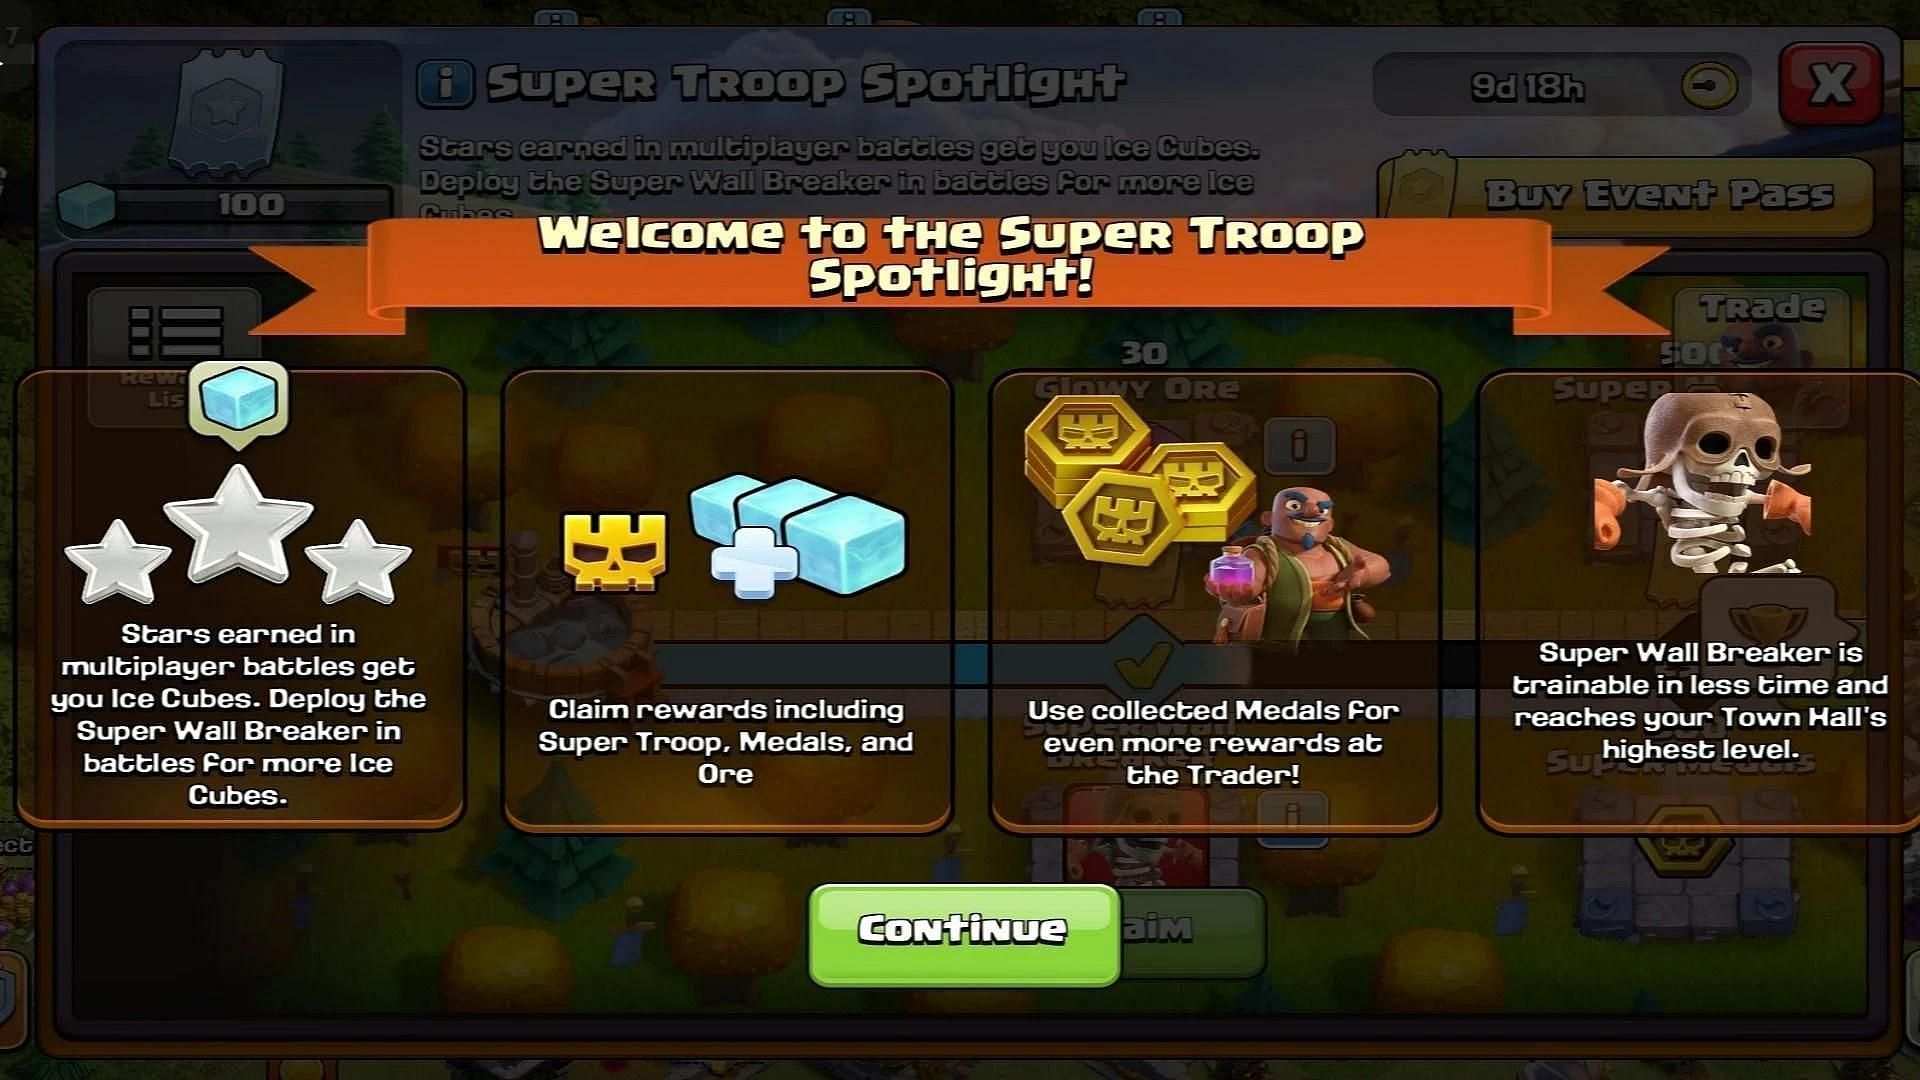 Clash of Clans Super Wall Breaker Spotlight Event rewards (Image via Supercell)